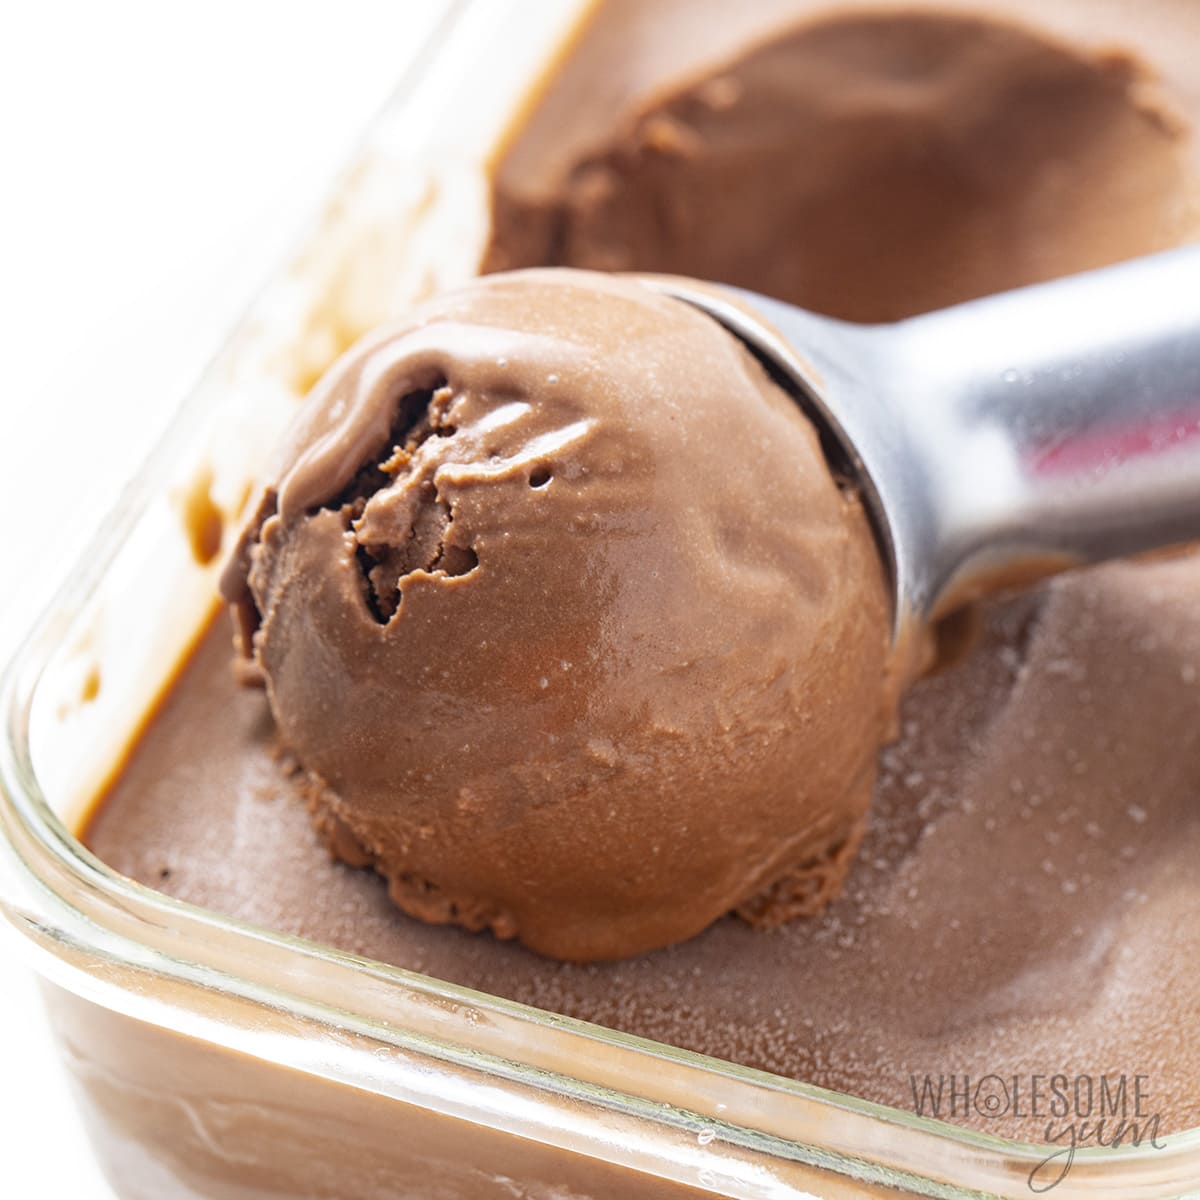 Scoop of chocolate protein ice cream.